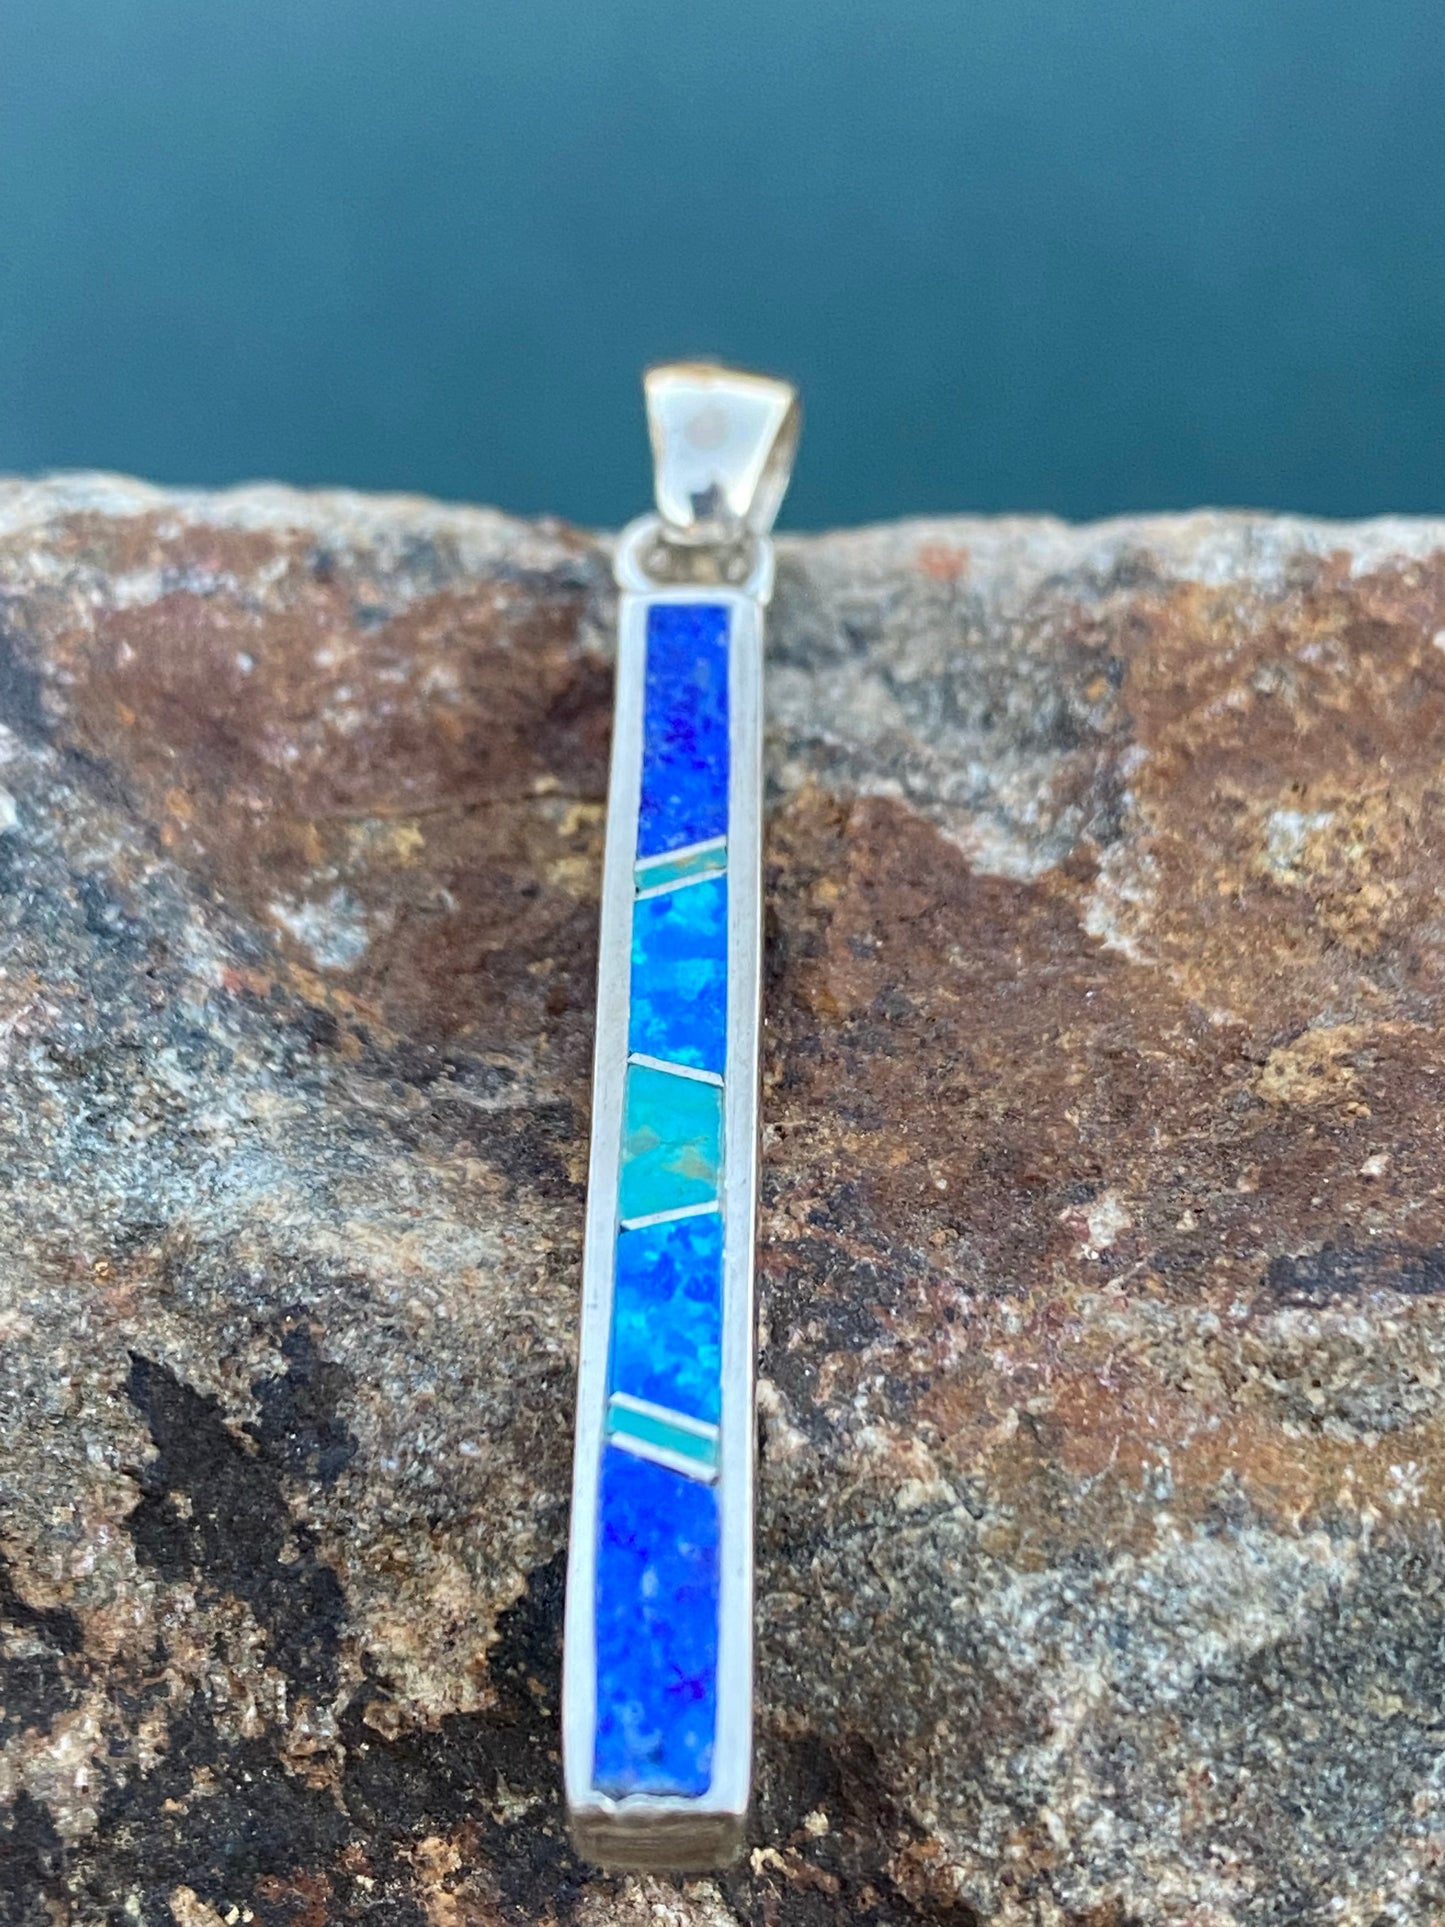 Navajo Lapis, Turquoise, Blue Opal Pendant